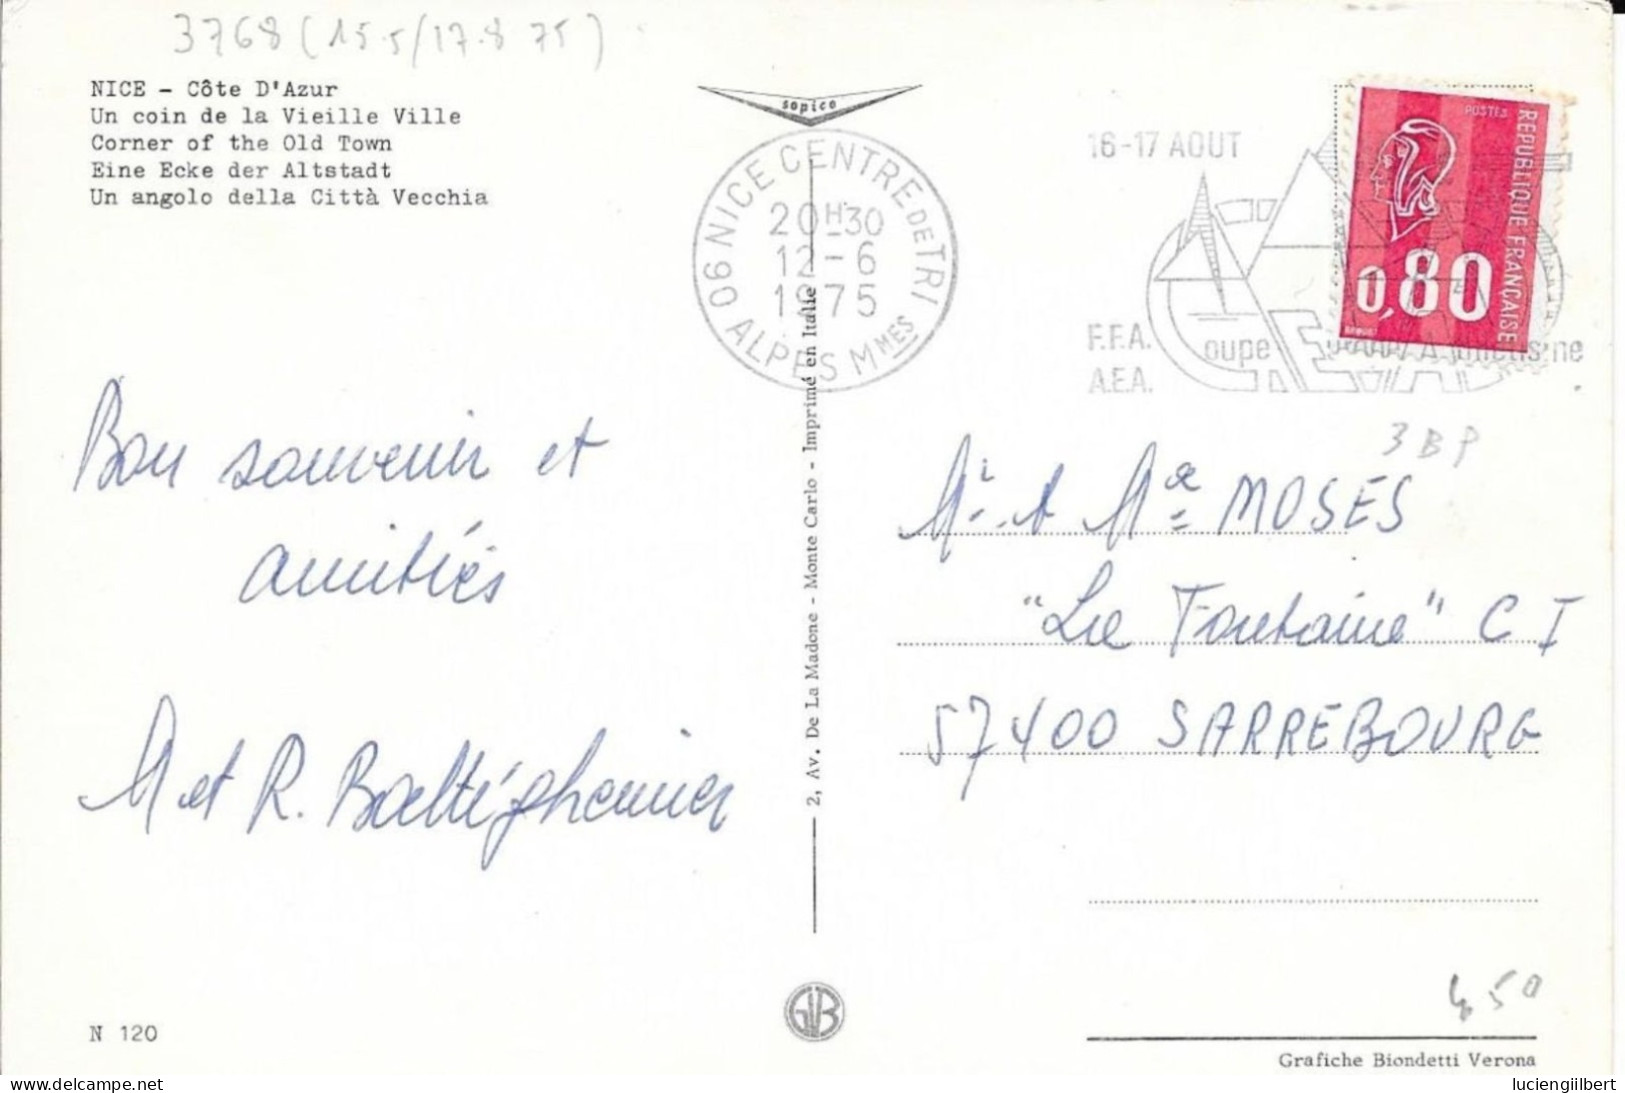 ALPES MARITIMES 06  -  NICE  - FLAMME N° 3768  16 17 AOUT NICE 75 FFA AEA D'EUROPE D'ATHLETISME - 1975 - Mechanical Postmarks (Advertisement)